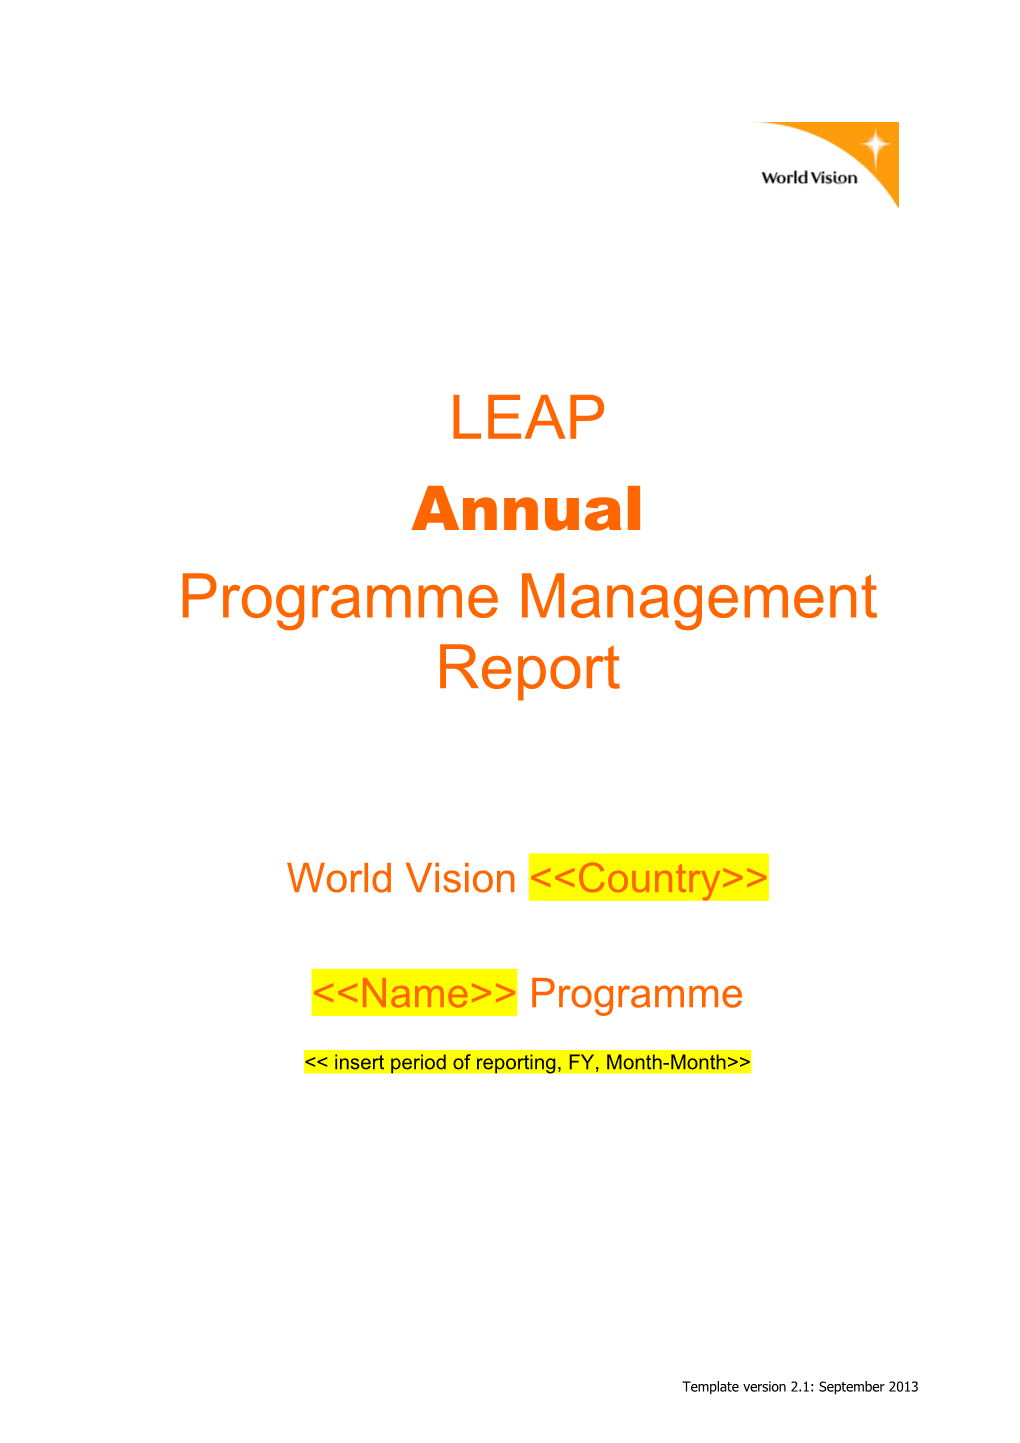 Programme Management Report